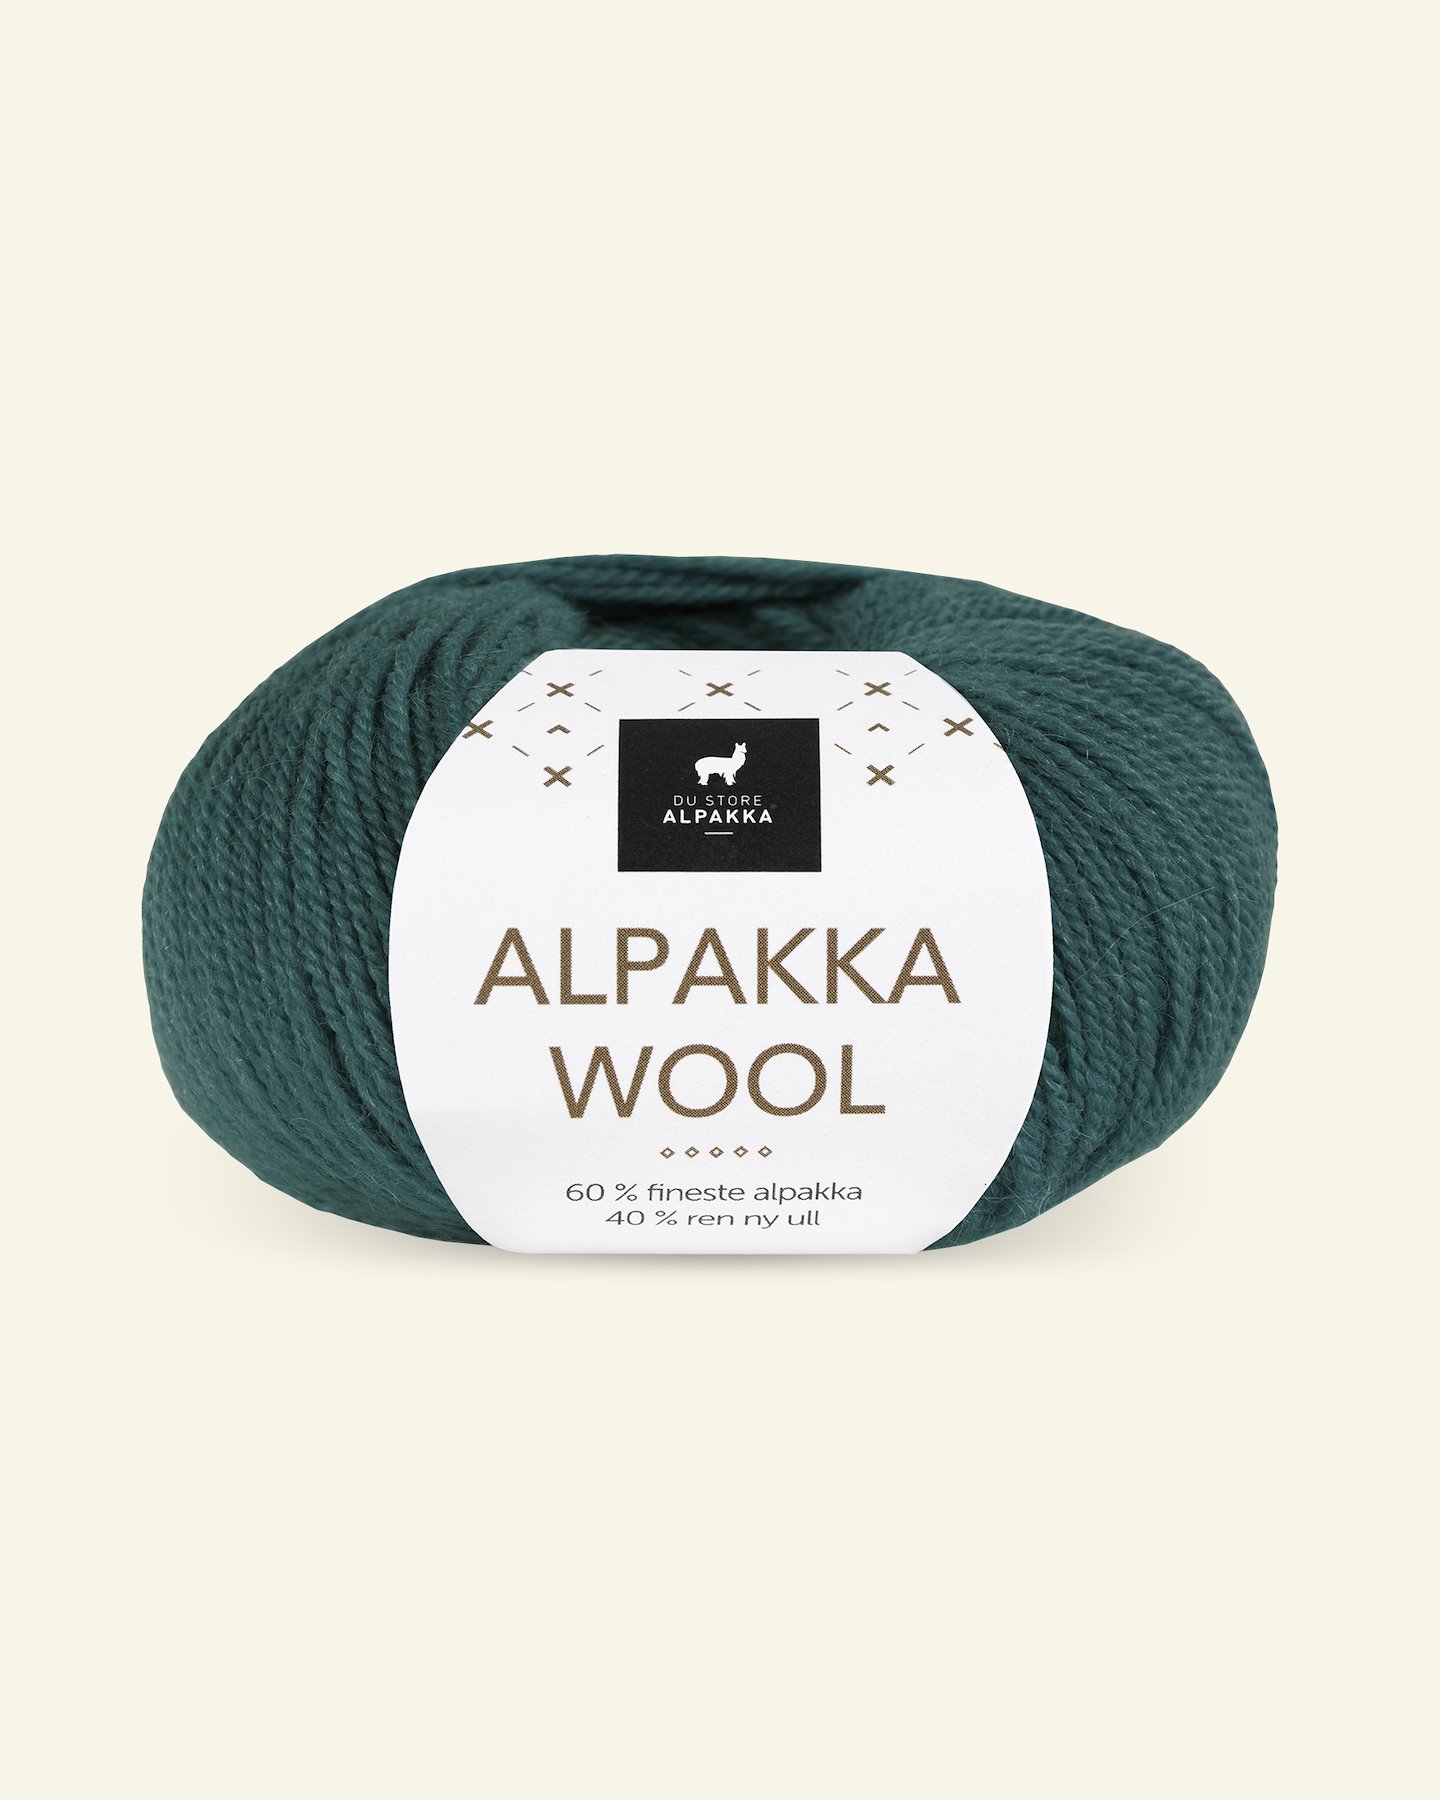 Du Store Alpakka, Alpaka Wolle "Alpakka Wool", blau/grün (524) 90000558_pack